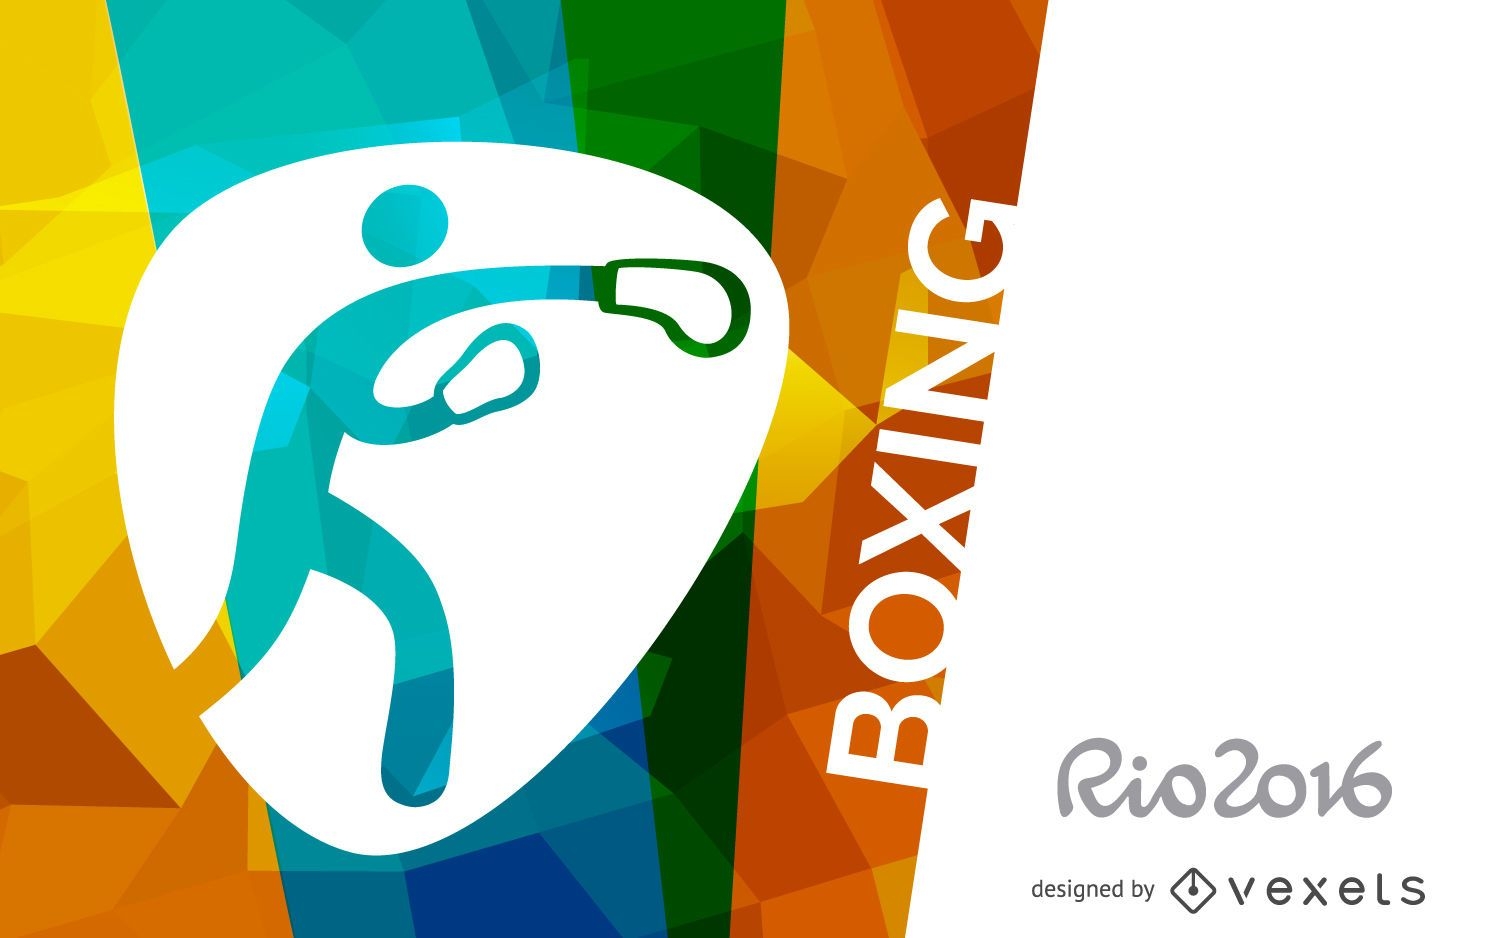 Rio 2016 boxing poster